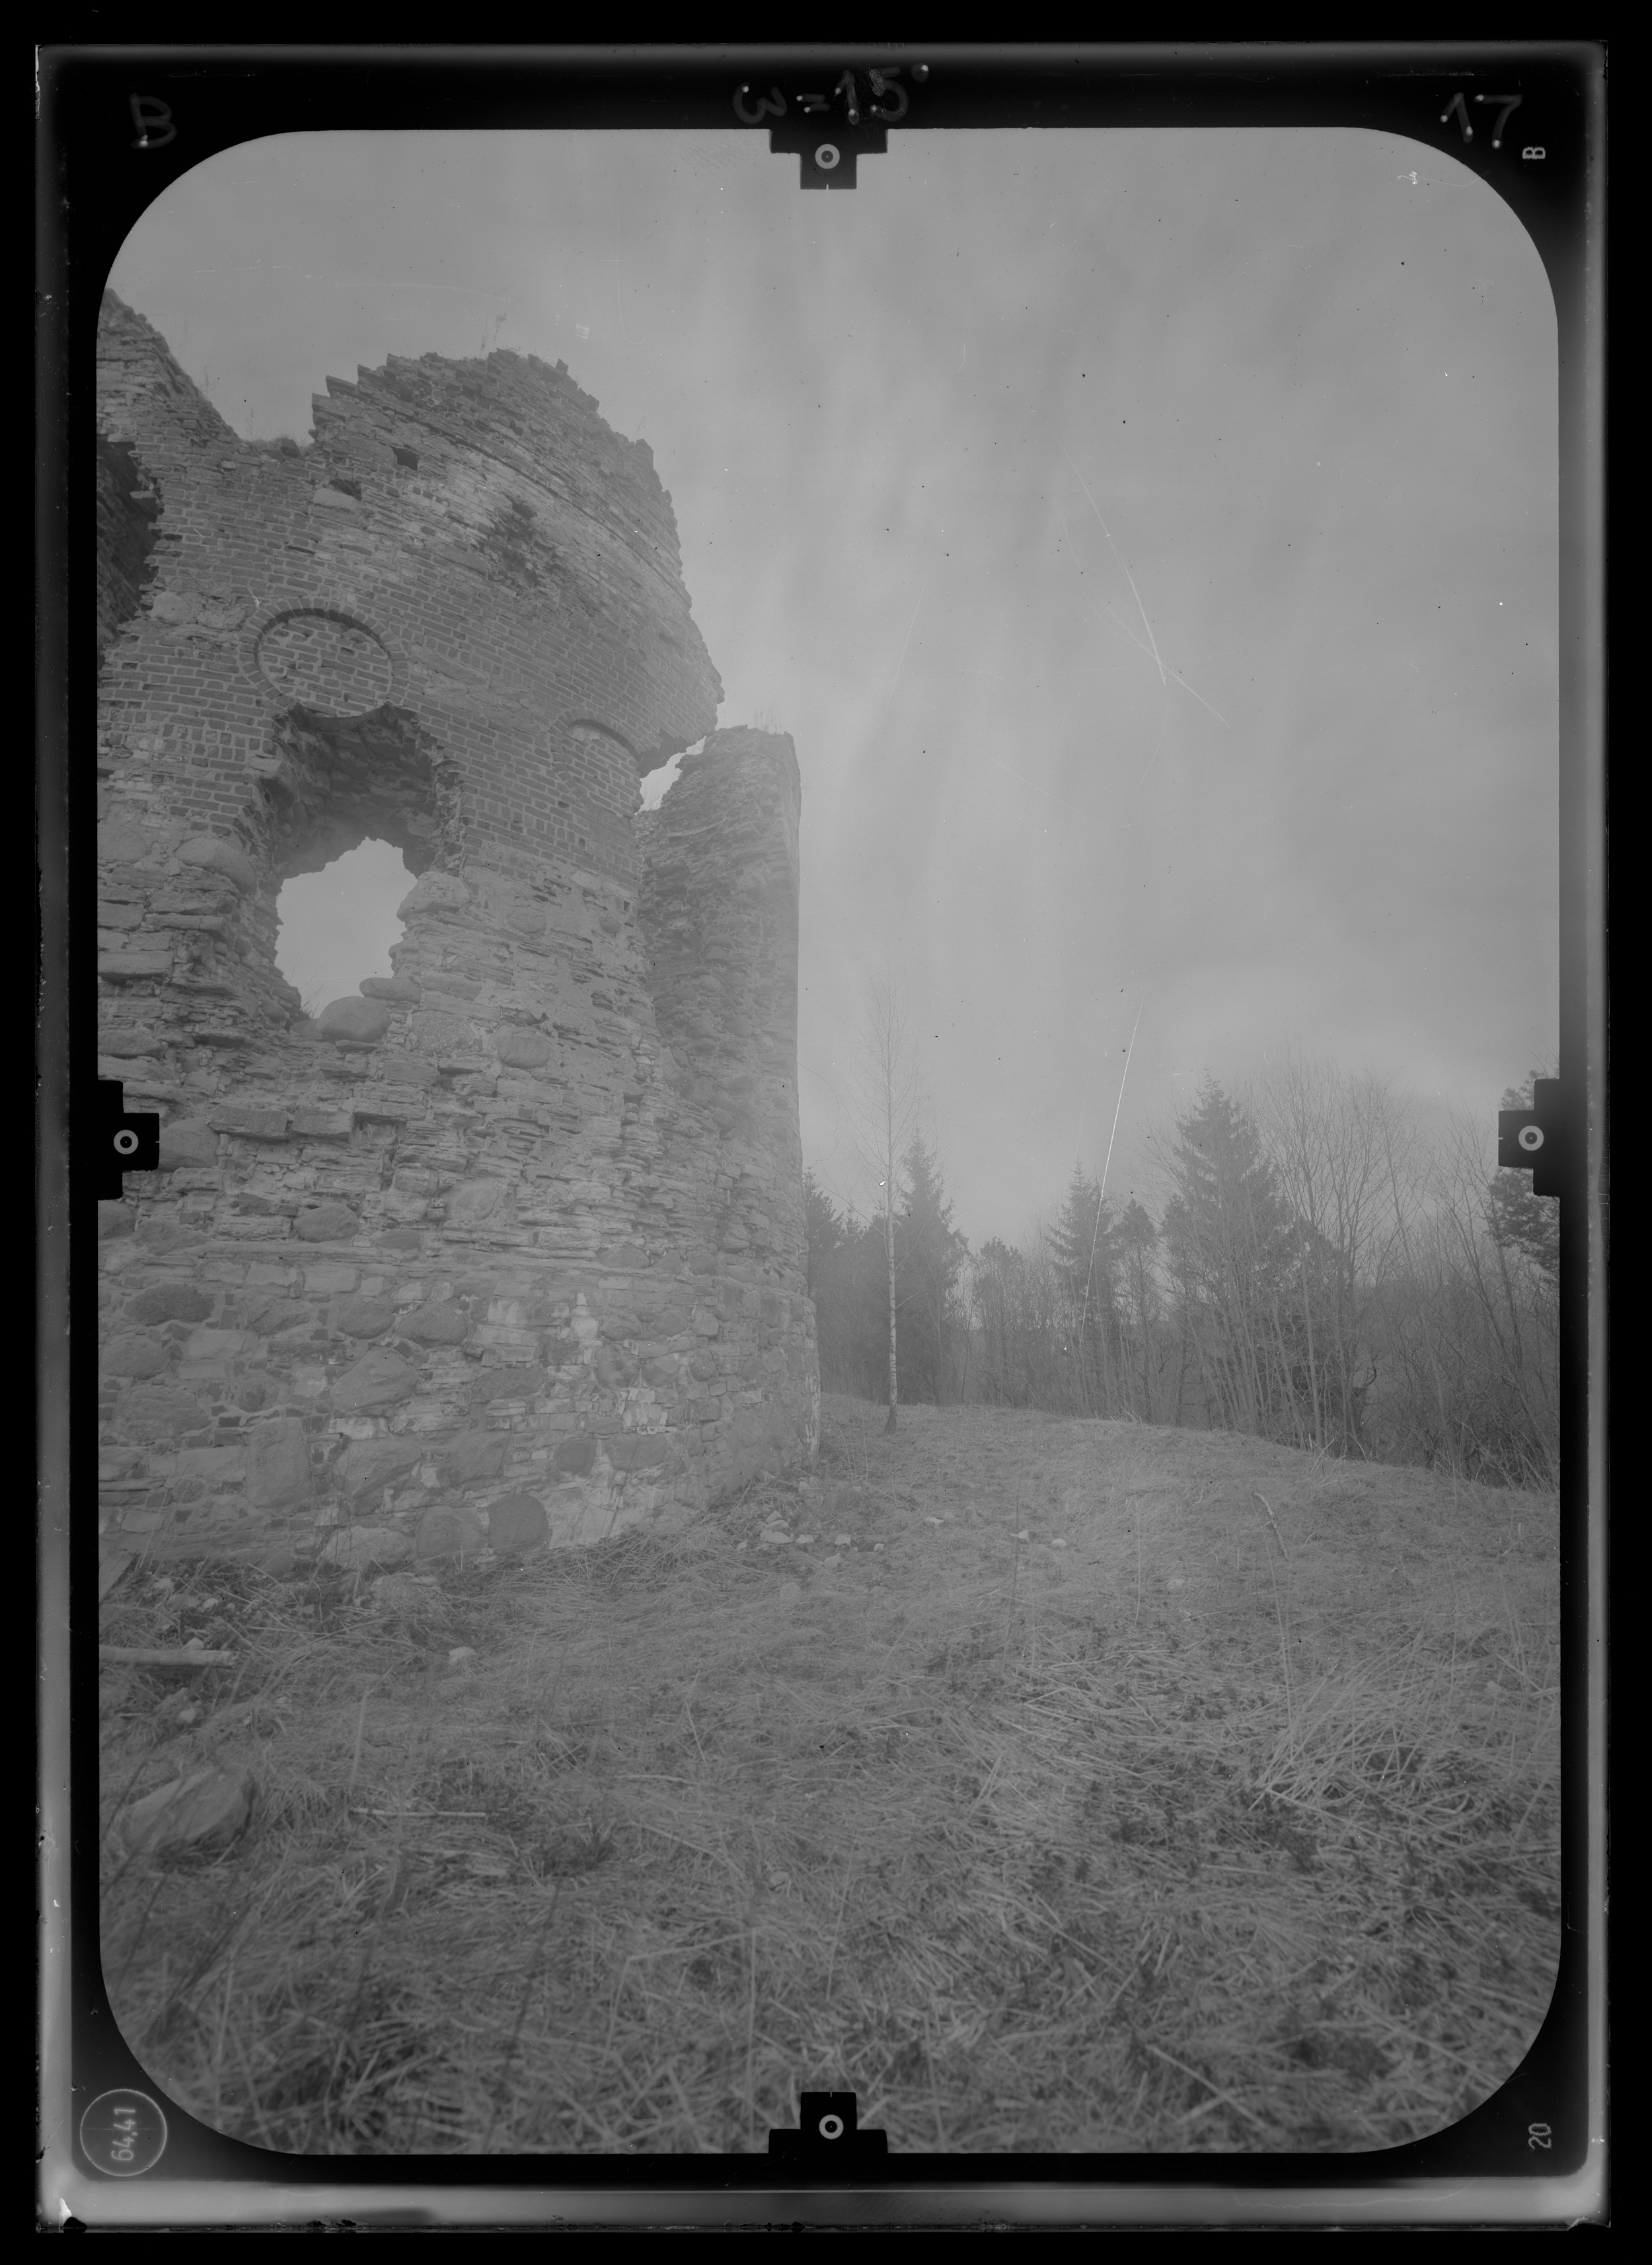 Vastseliina fortress B17-15 - Vastseliina Bishop Castle and fortress. Photogrammetric survey 1991